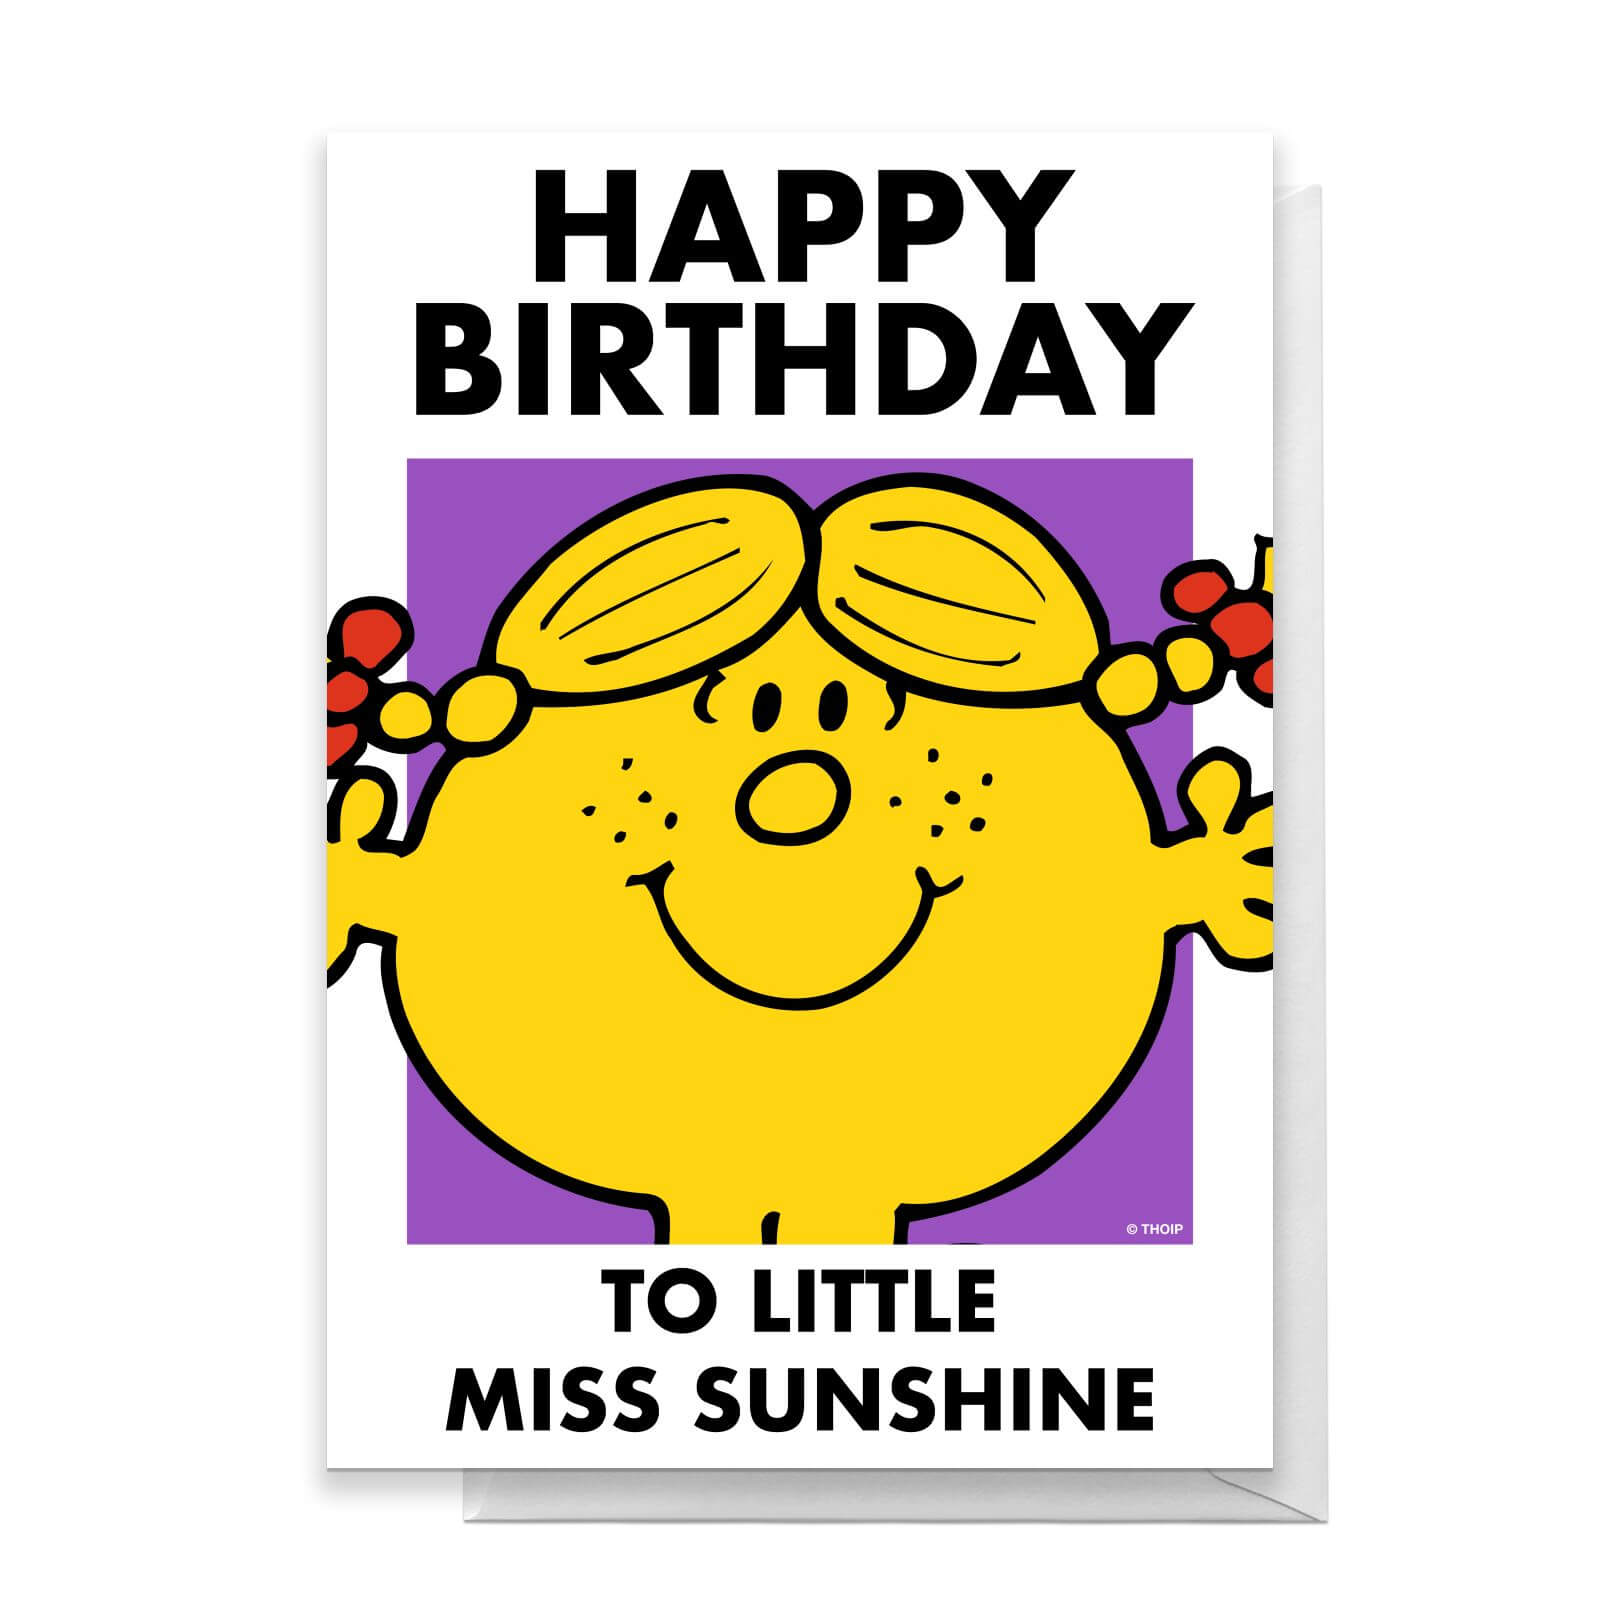 Mr Men & Little Miss Happy Birthday To Little Miss Sunshine Greetings Card - Standard Card